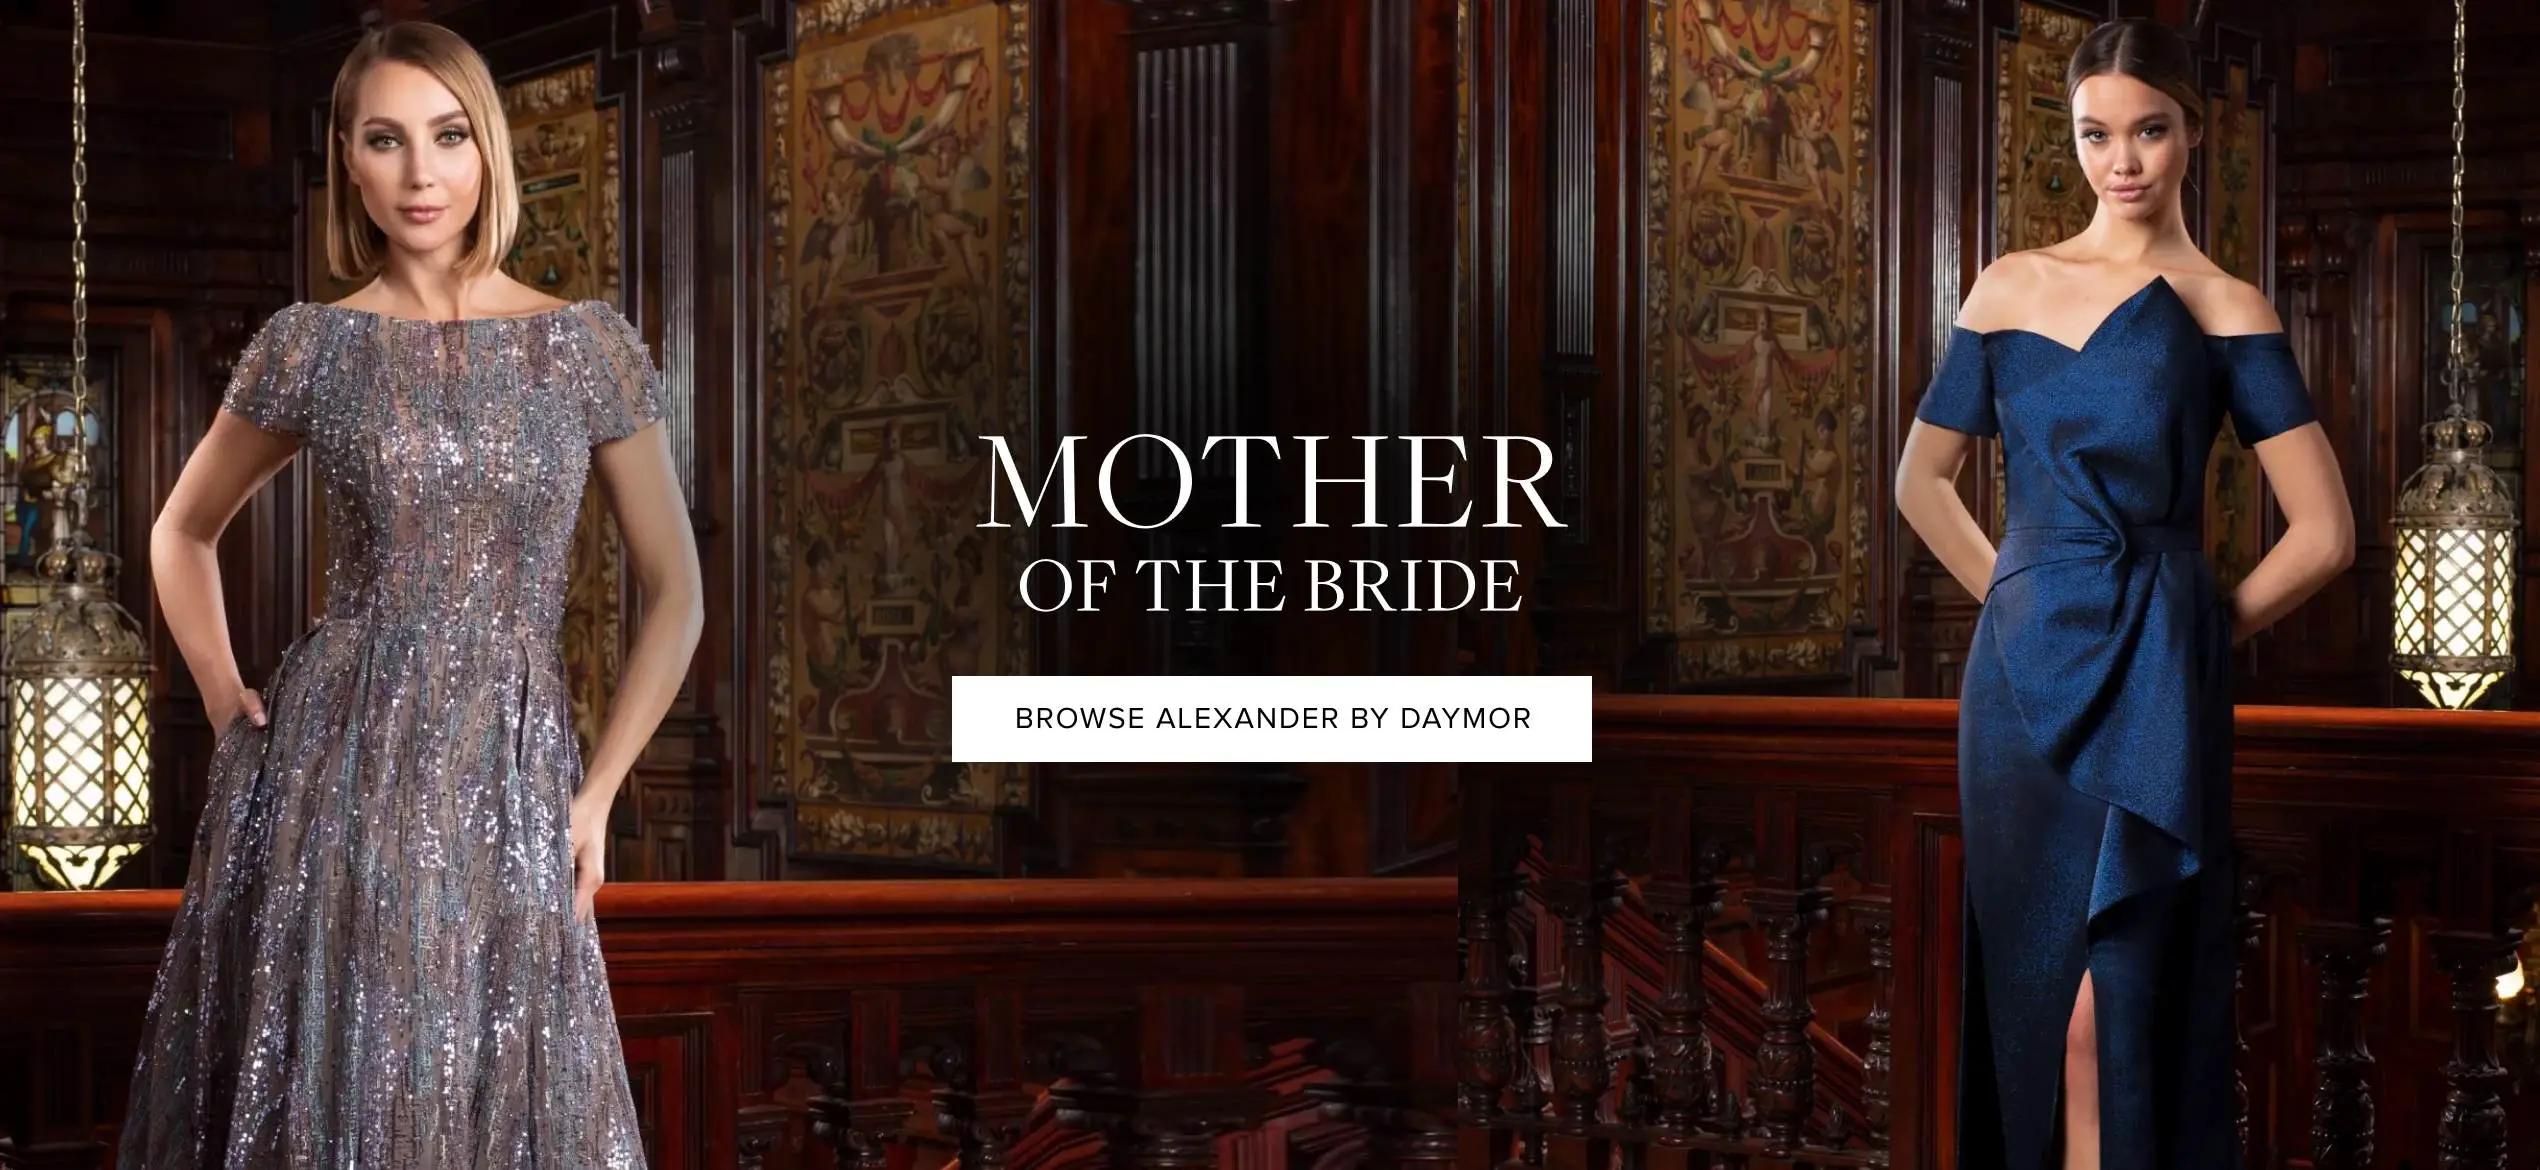 Mother of the Bride Banner Desktop